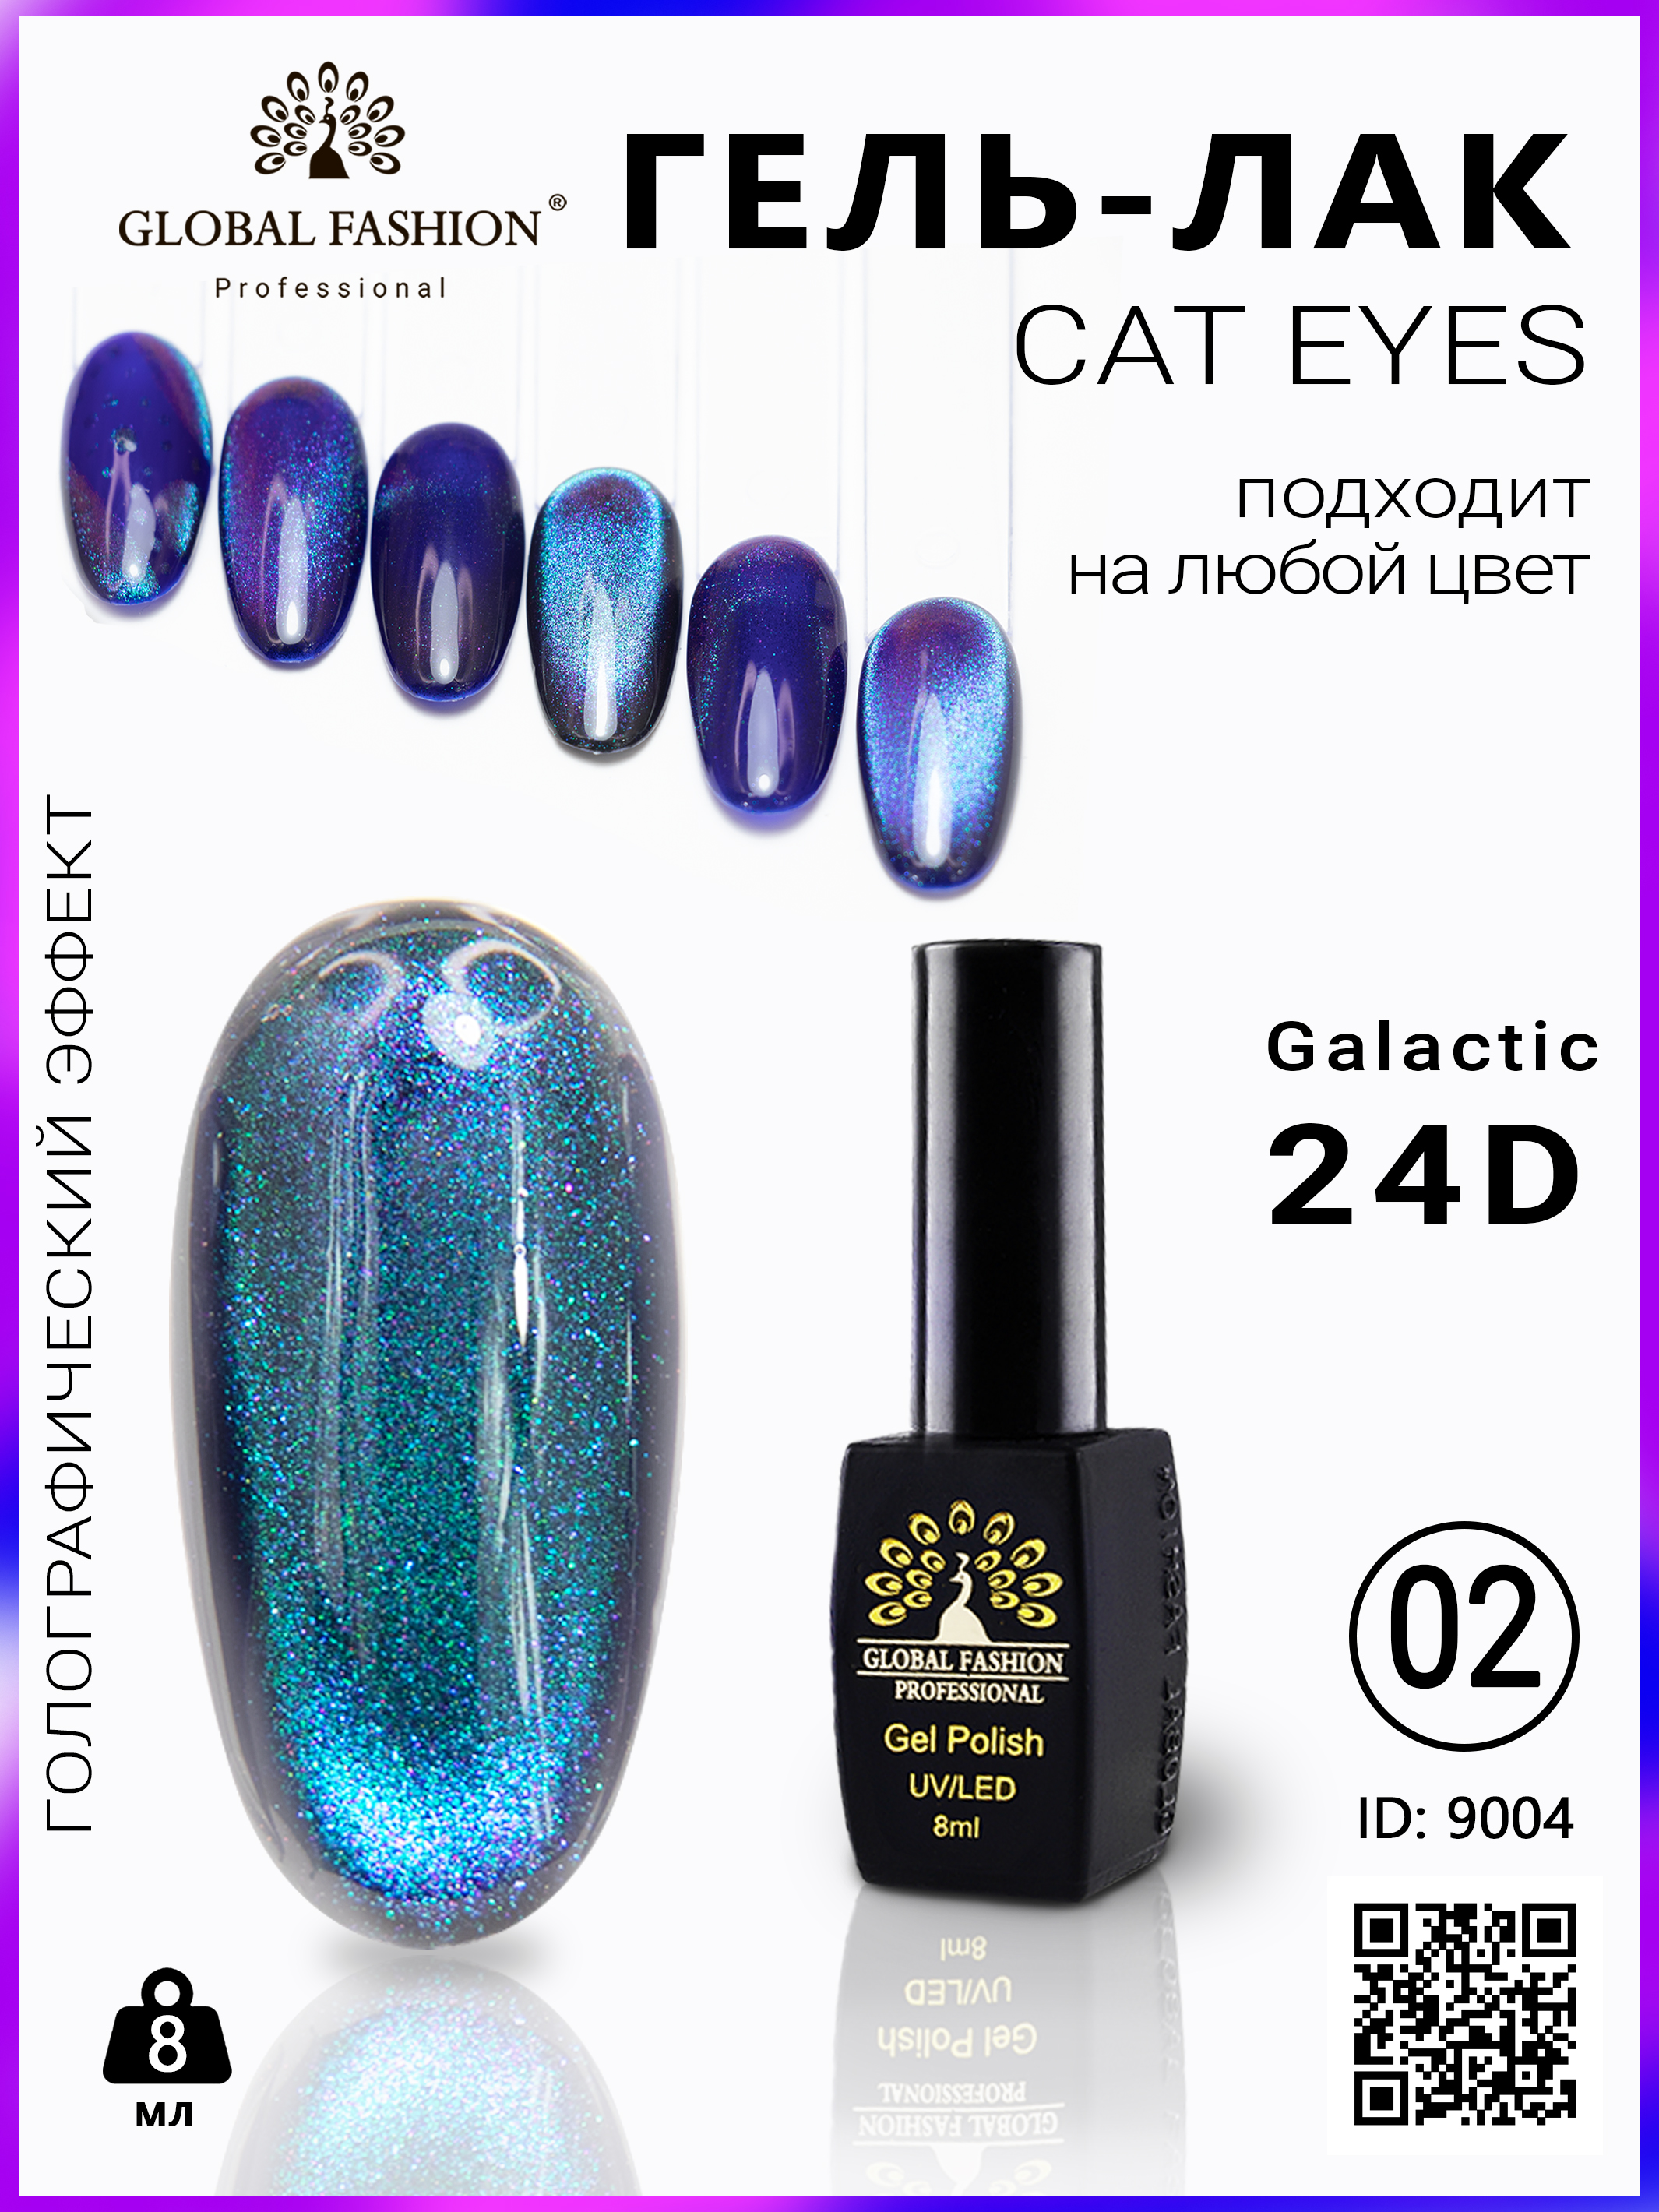 Гель лак кошачий глаз 24D Galactic Global Fashion 8 мл, 02 найти в  интернет-магазине Global Fashion